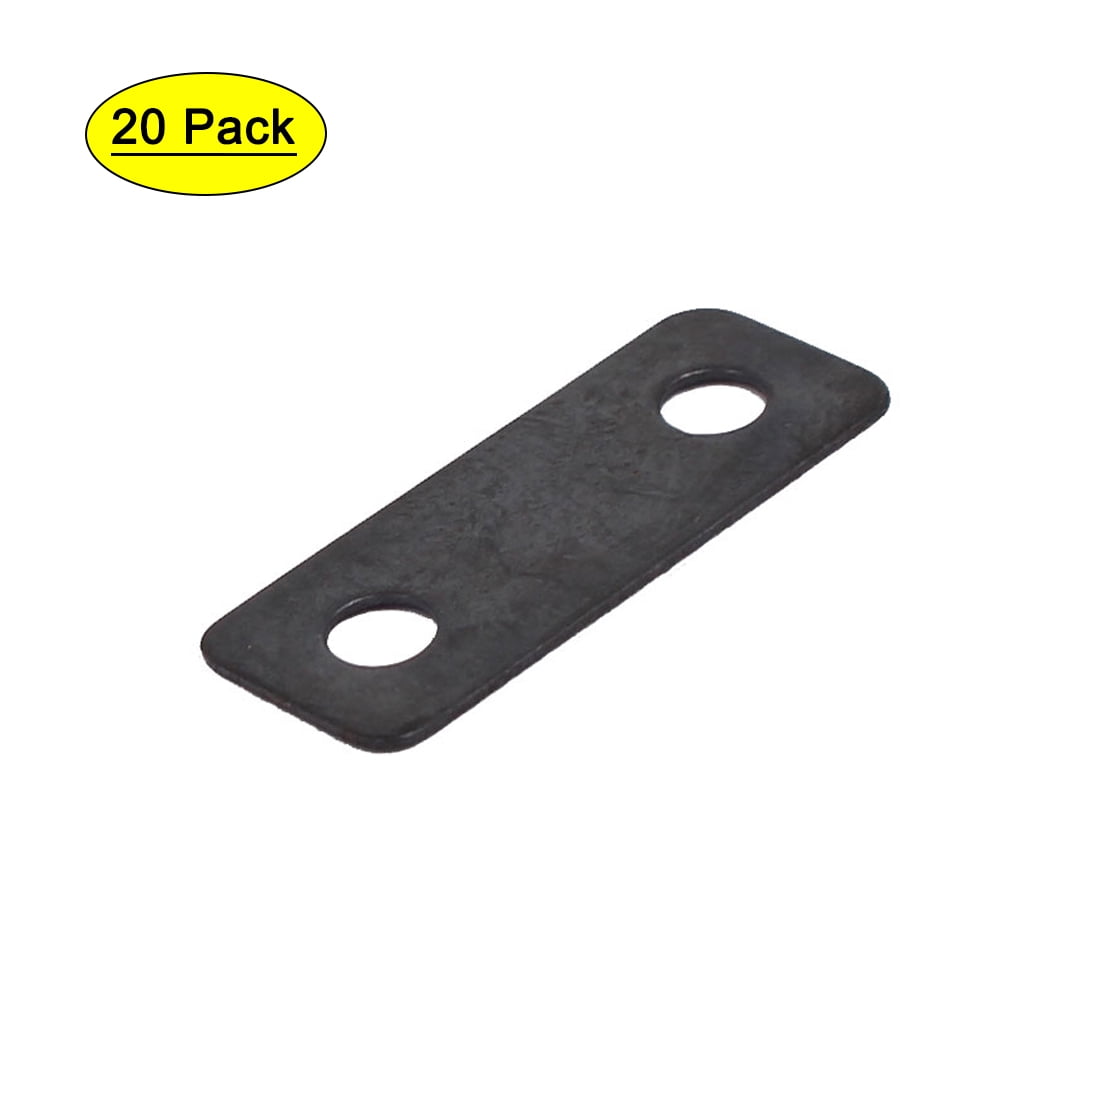 24mmx9mmx0.5mm Flat Plate Angle Bracket Corner Brace Joint Fastener Black 20pcs 